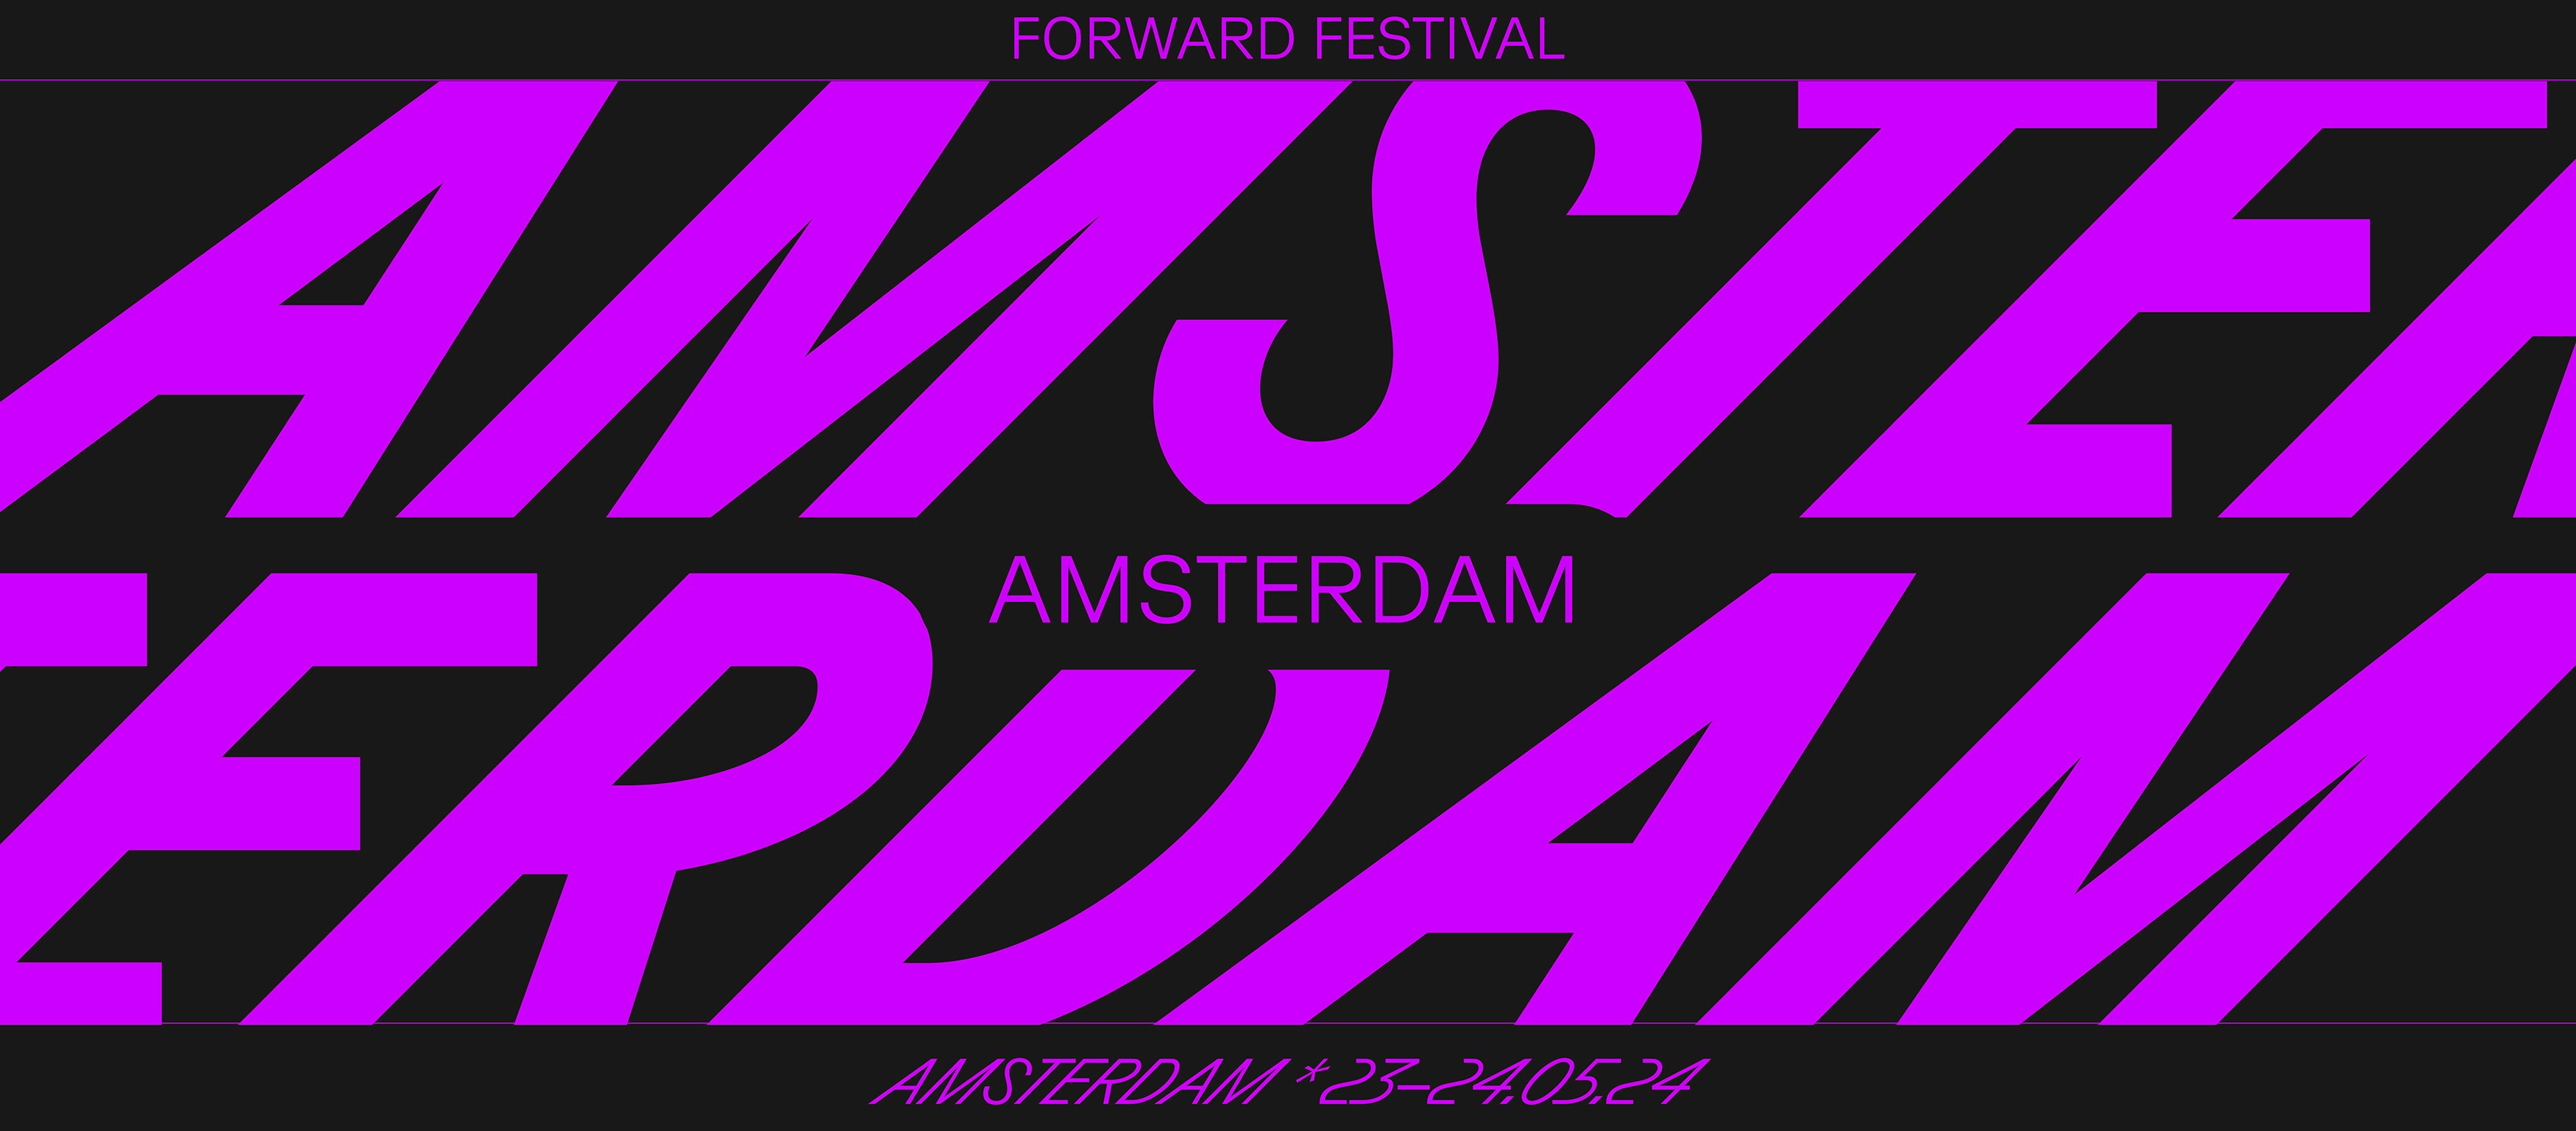 Forward-Festival_Amsterdam_Cover_V2.jpg?auto=format&fit=max&w=3840